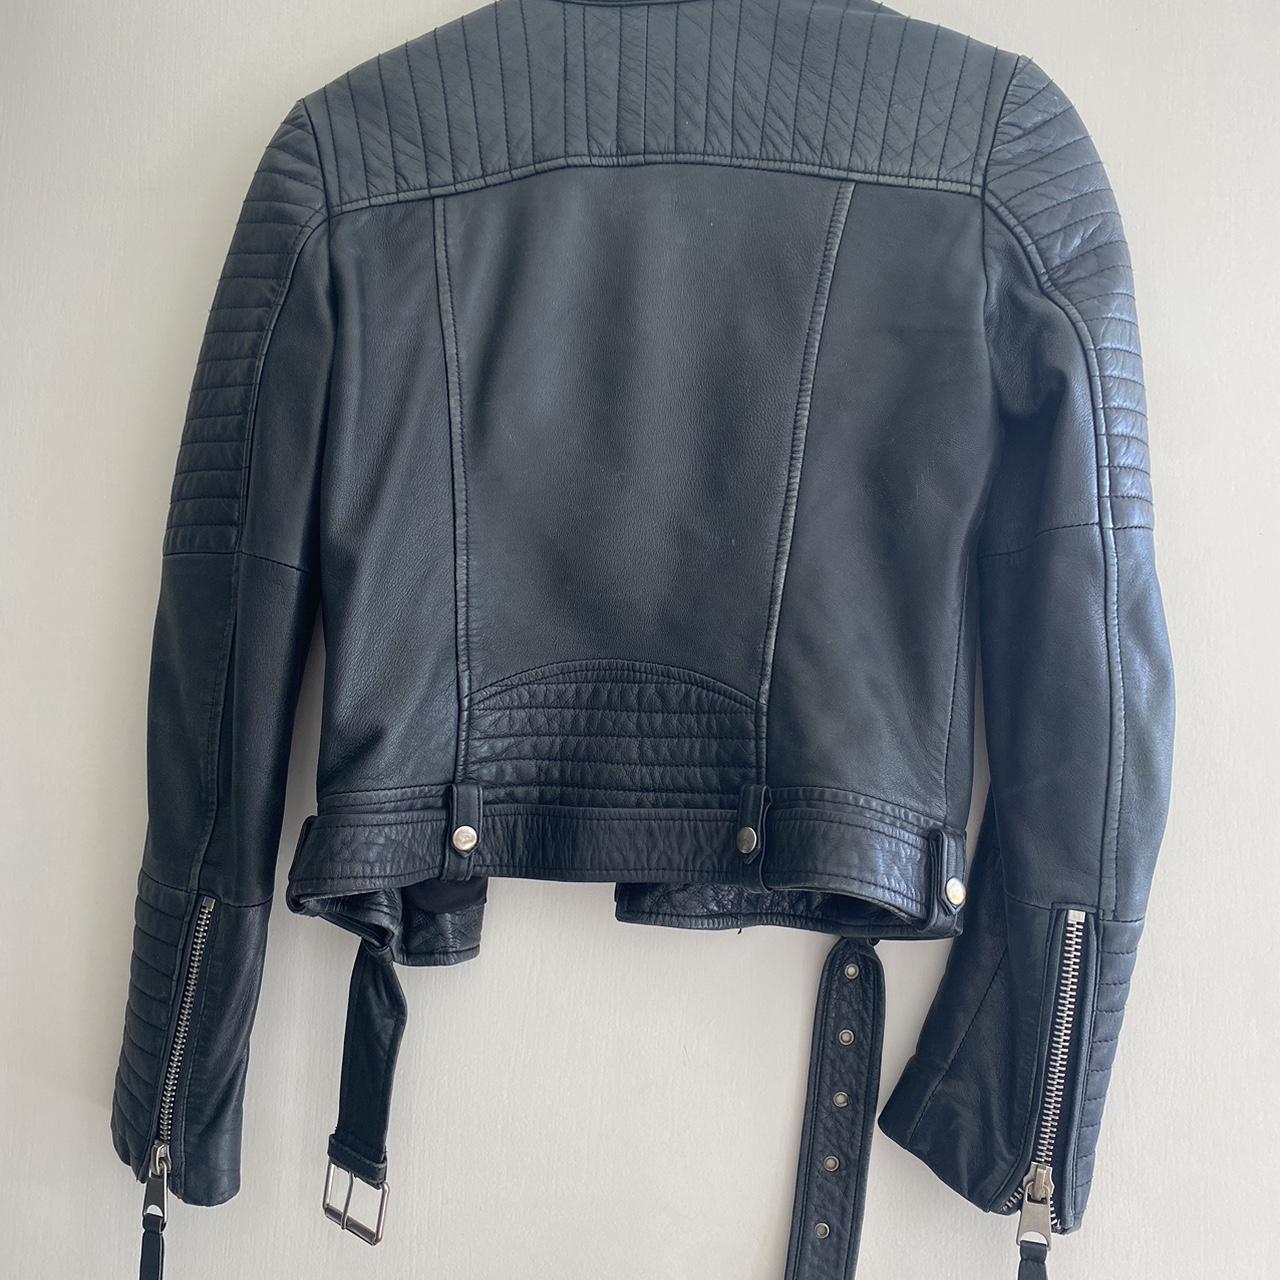 Zara real leather biker jacket Love this jacket so... - Depop